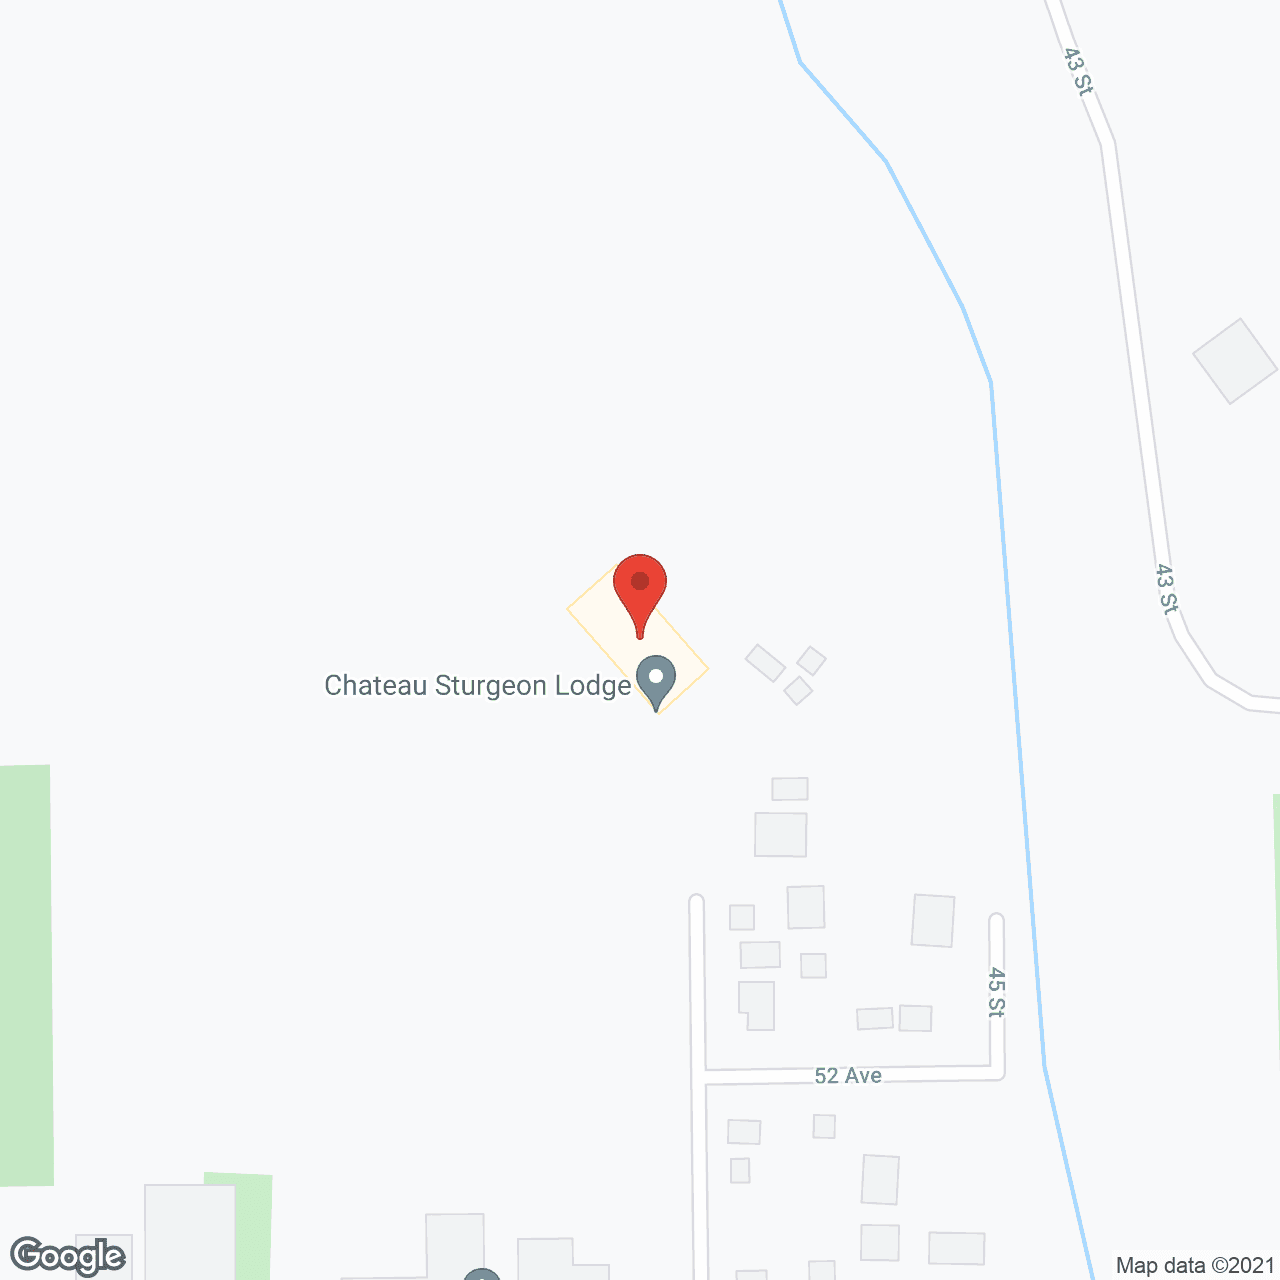 Chateau Sturgeon Lodge in google map